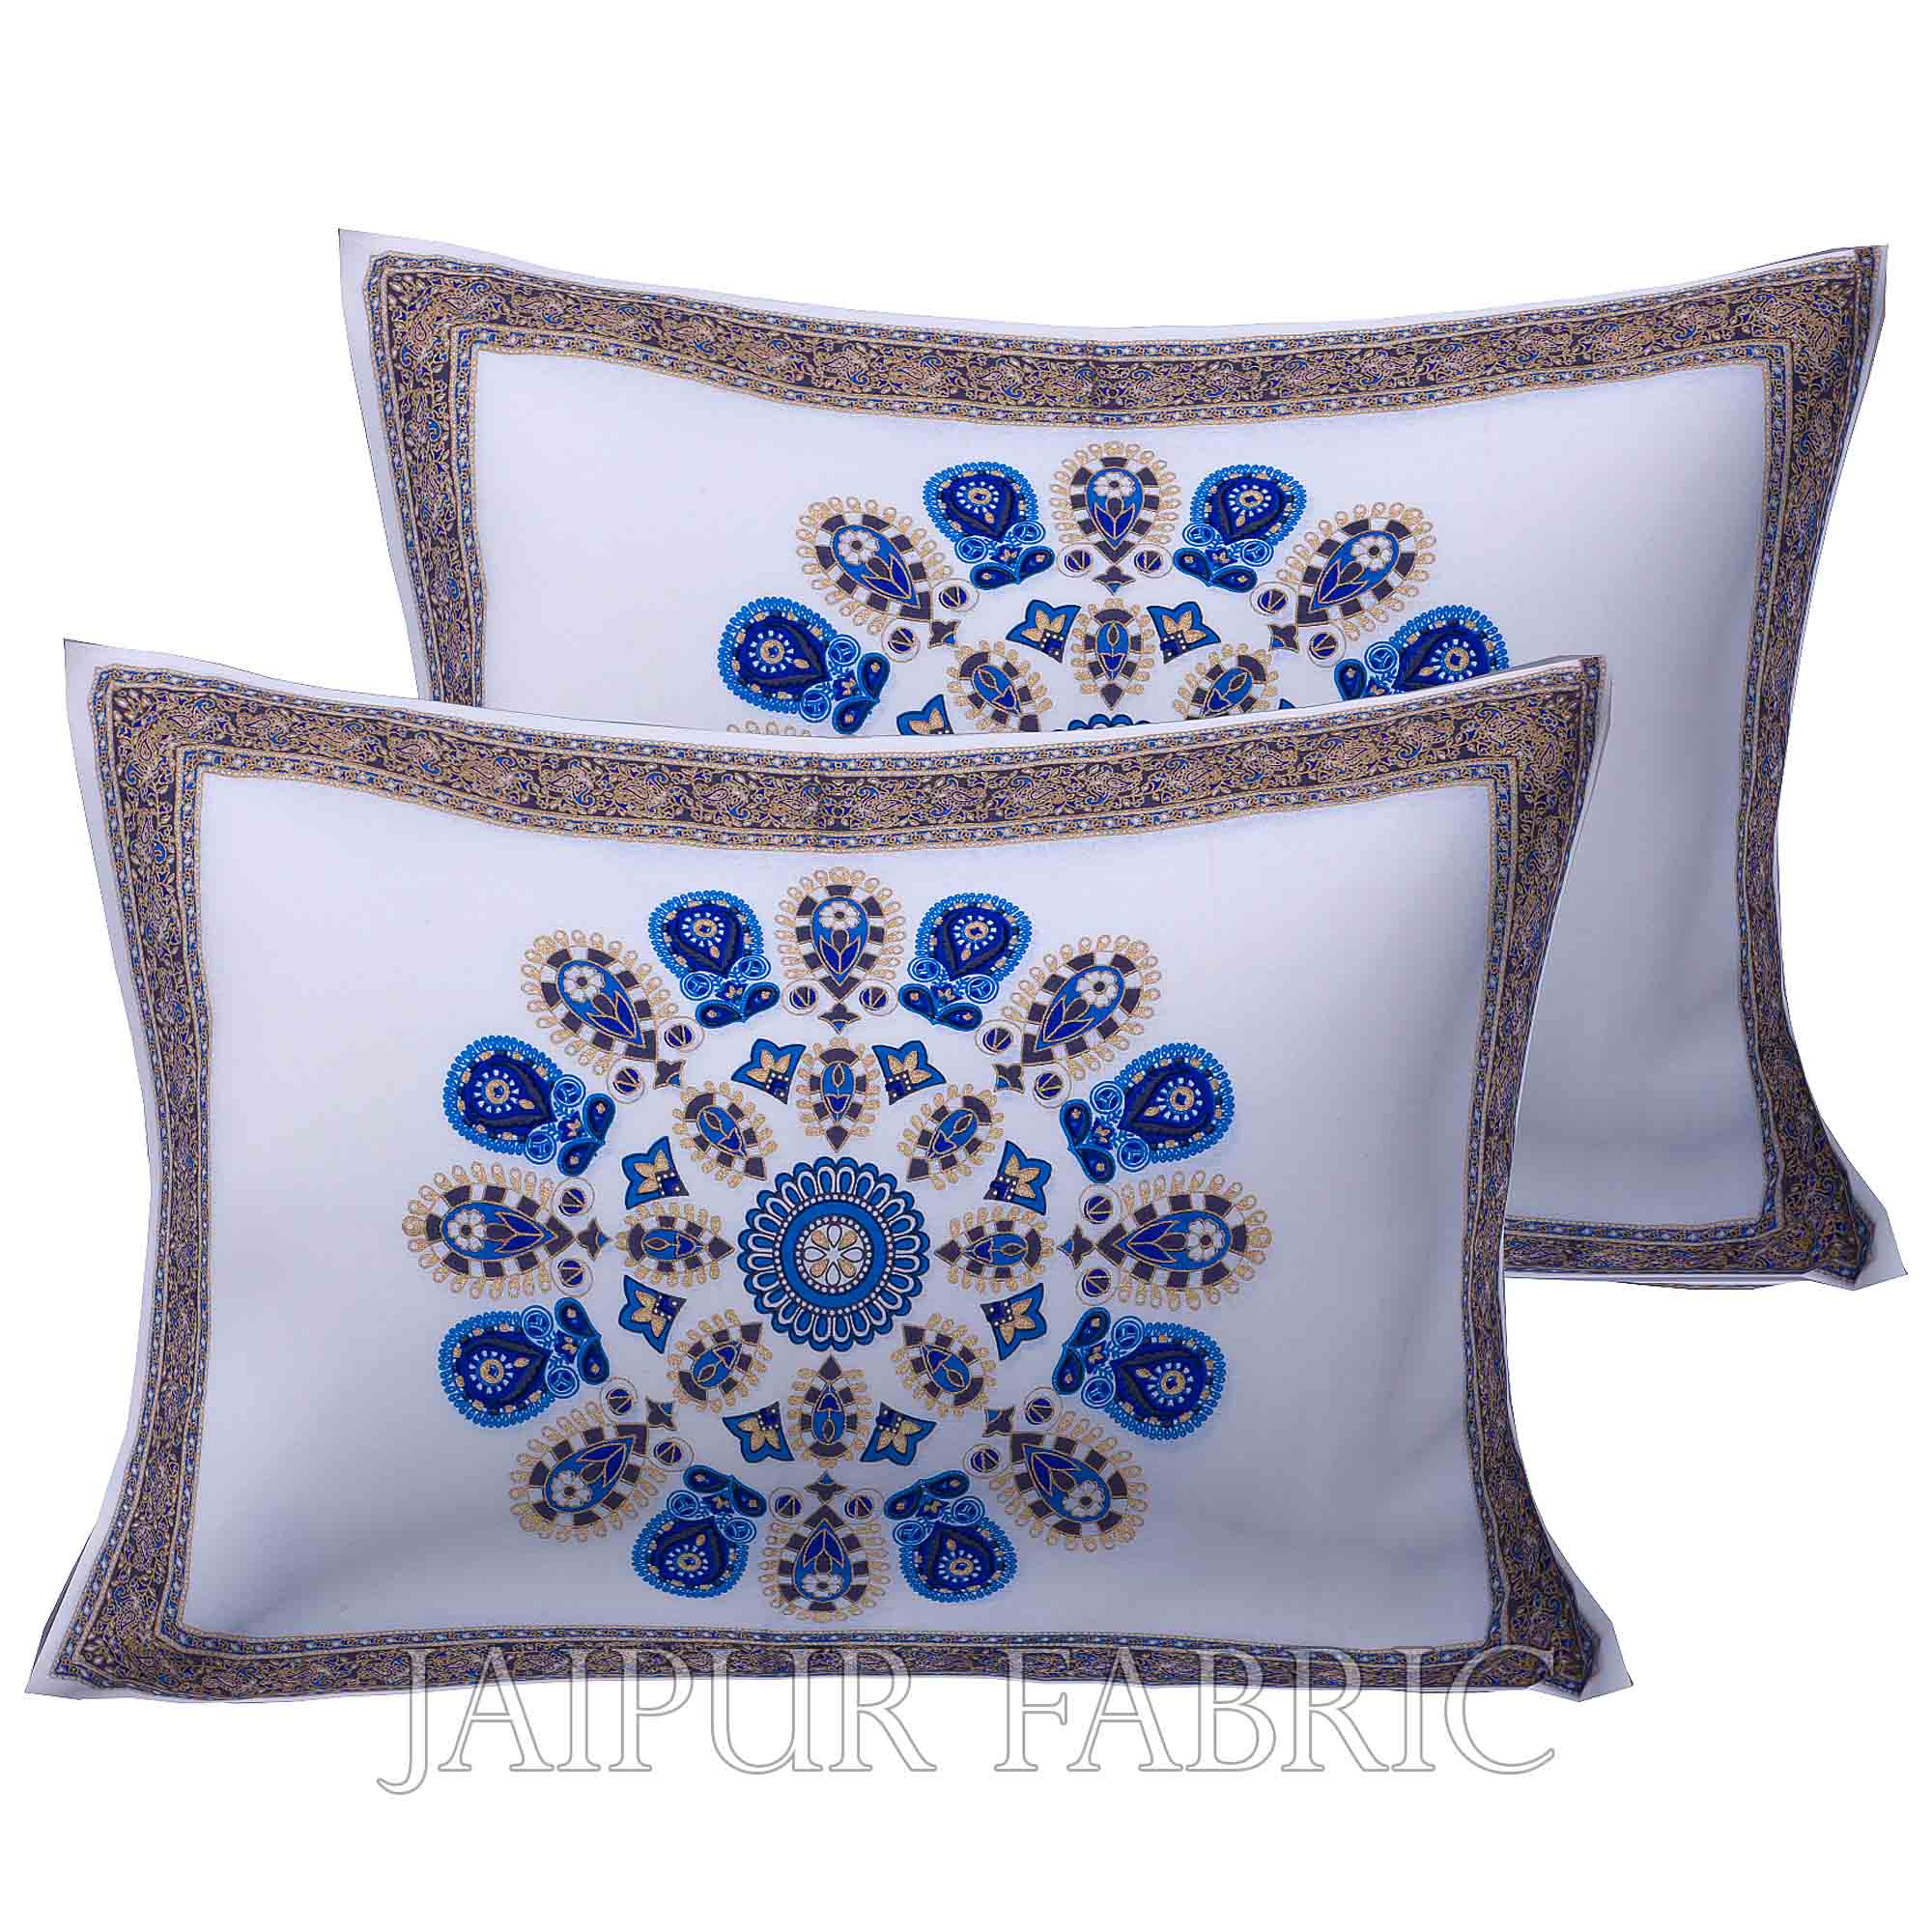 Mandala Blue White Khari Gold Print Double Bedsheet with 2 Pillow Covers